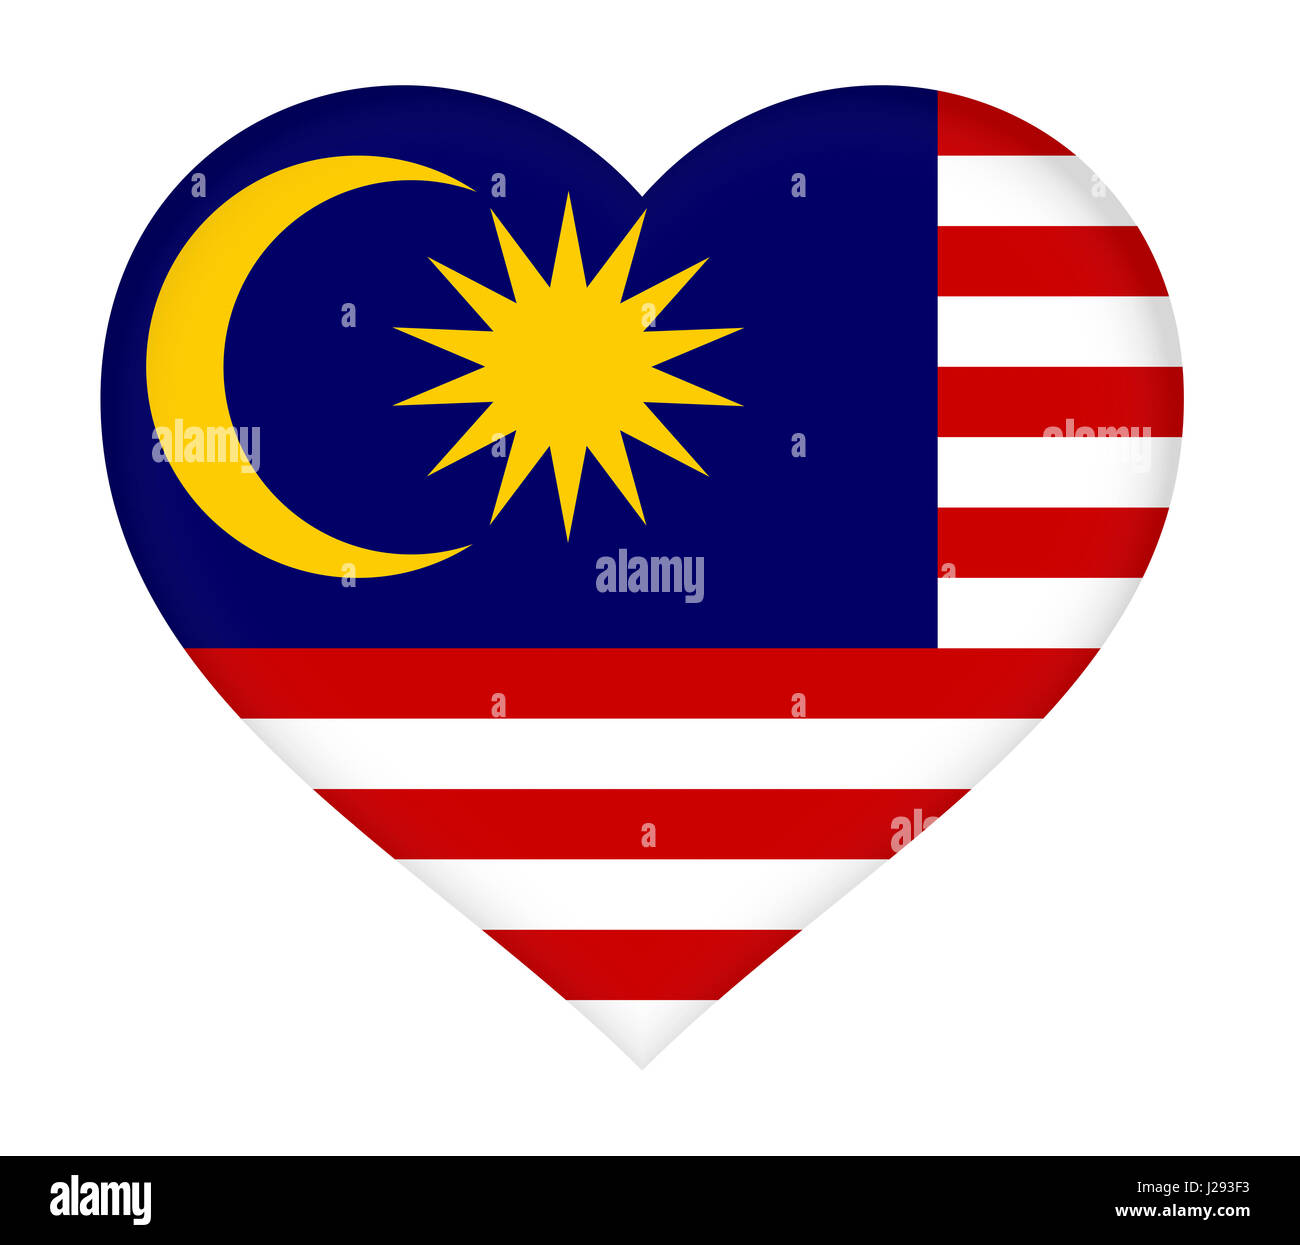 Illustration of the flag of Malaysia shaped like a heart